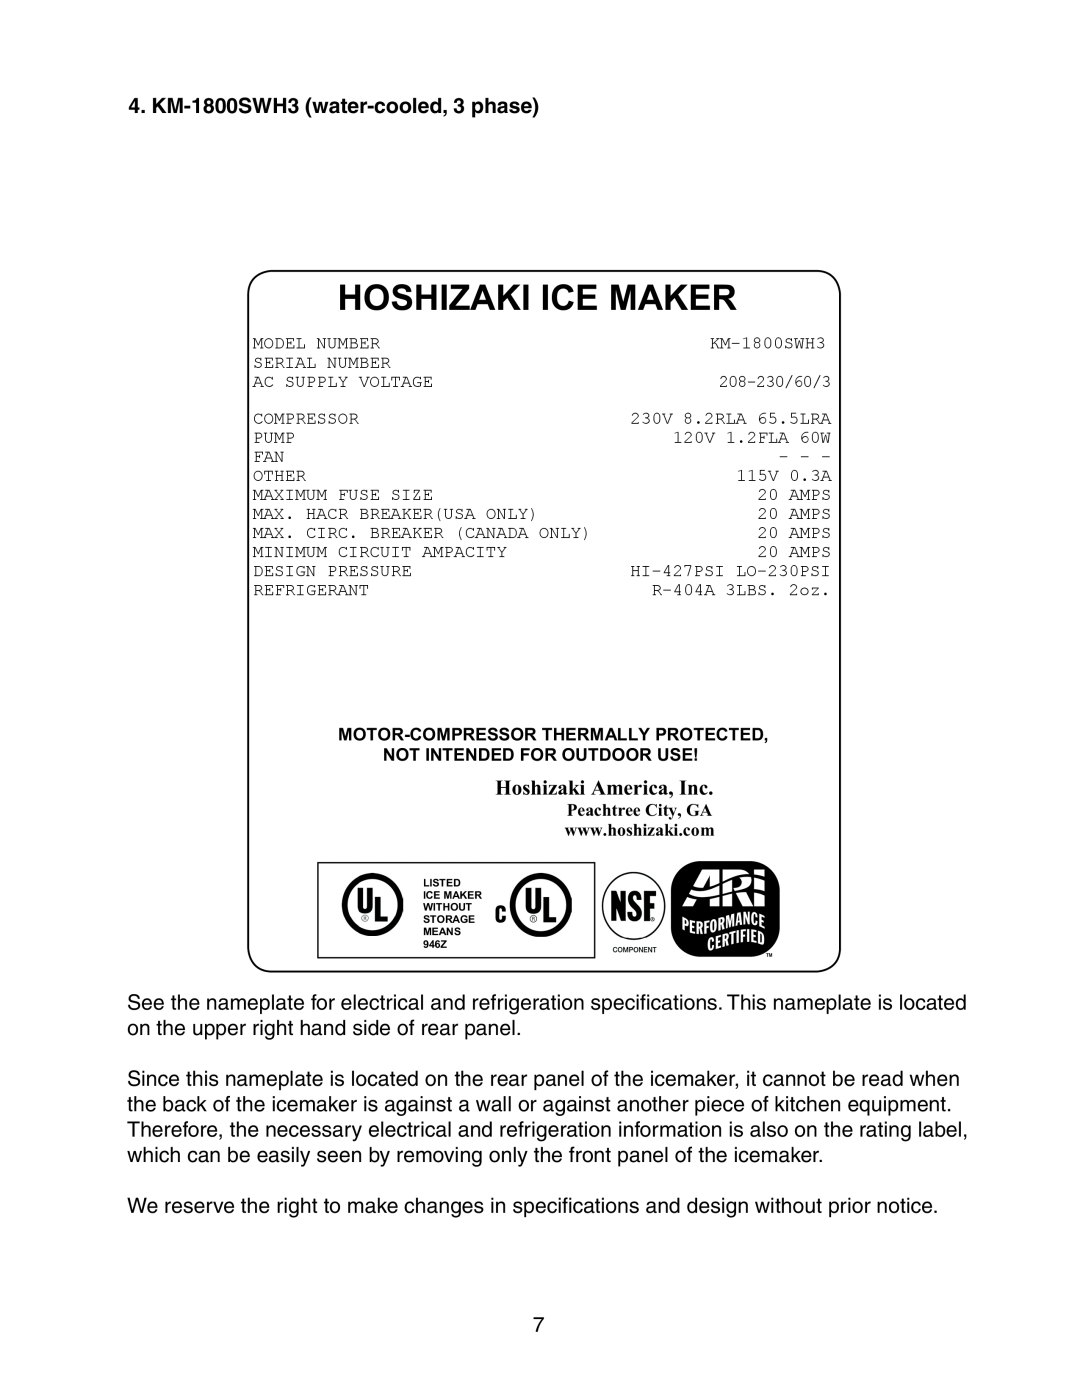 Hoshizaki KM-1800SWH/3, KM-1800SRH/3 KM-1800SWH3 water-cooled, 3 phase, Hoshizaki Ice Maker, Hoshizaki America, Inc 